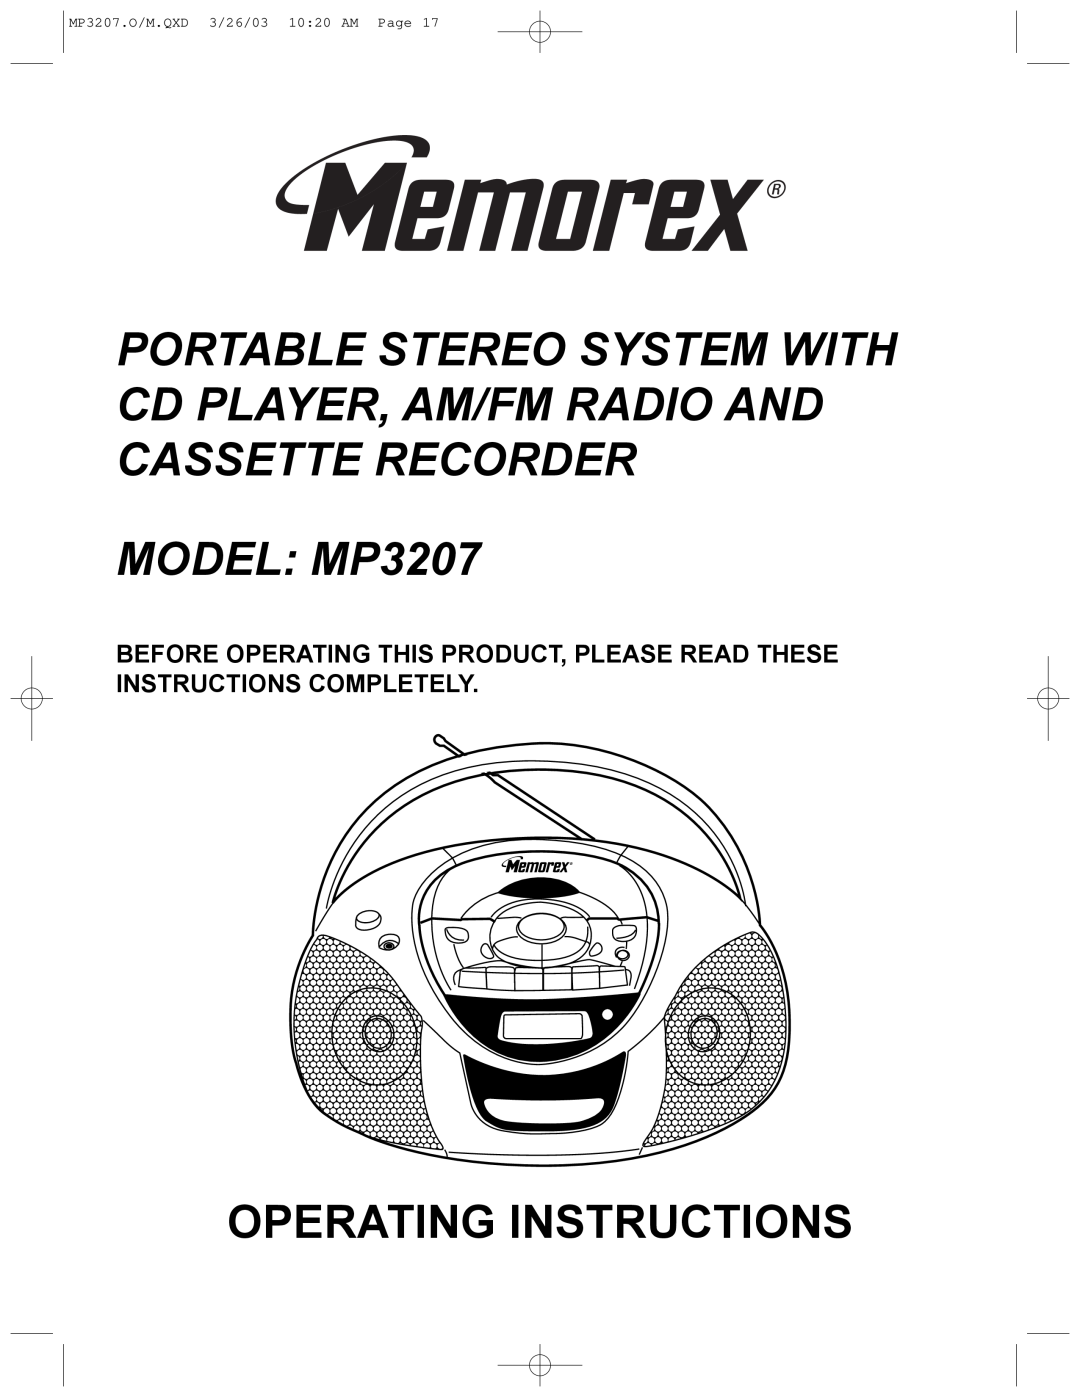 Memorex operating instructions MODEL MP3207, Operating Instructions, MP3207.O/M.QXD 3/26/03 10 20 AM Page 